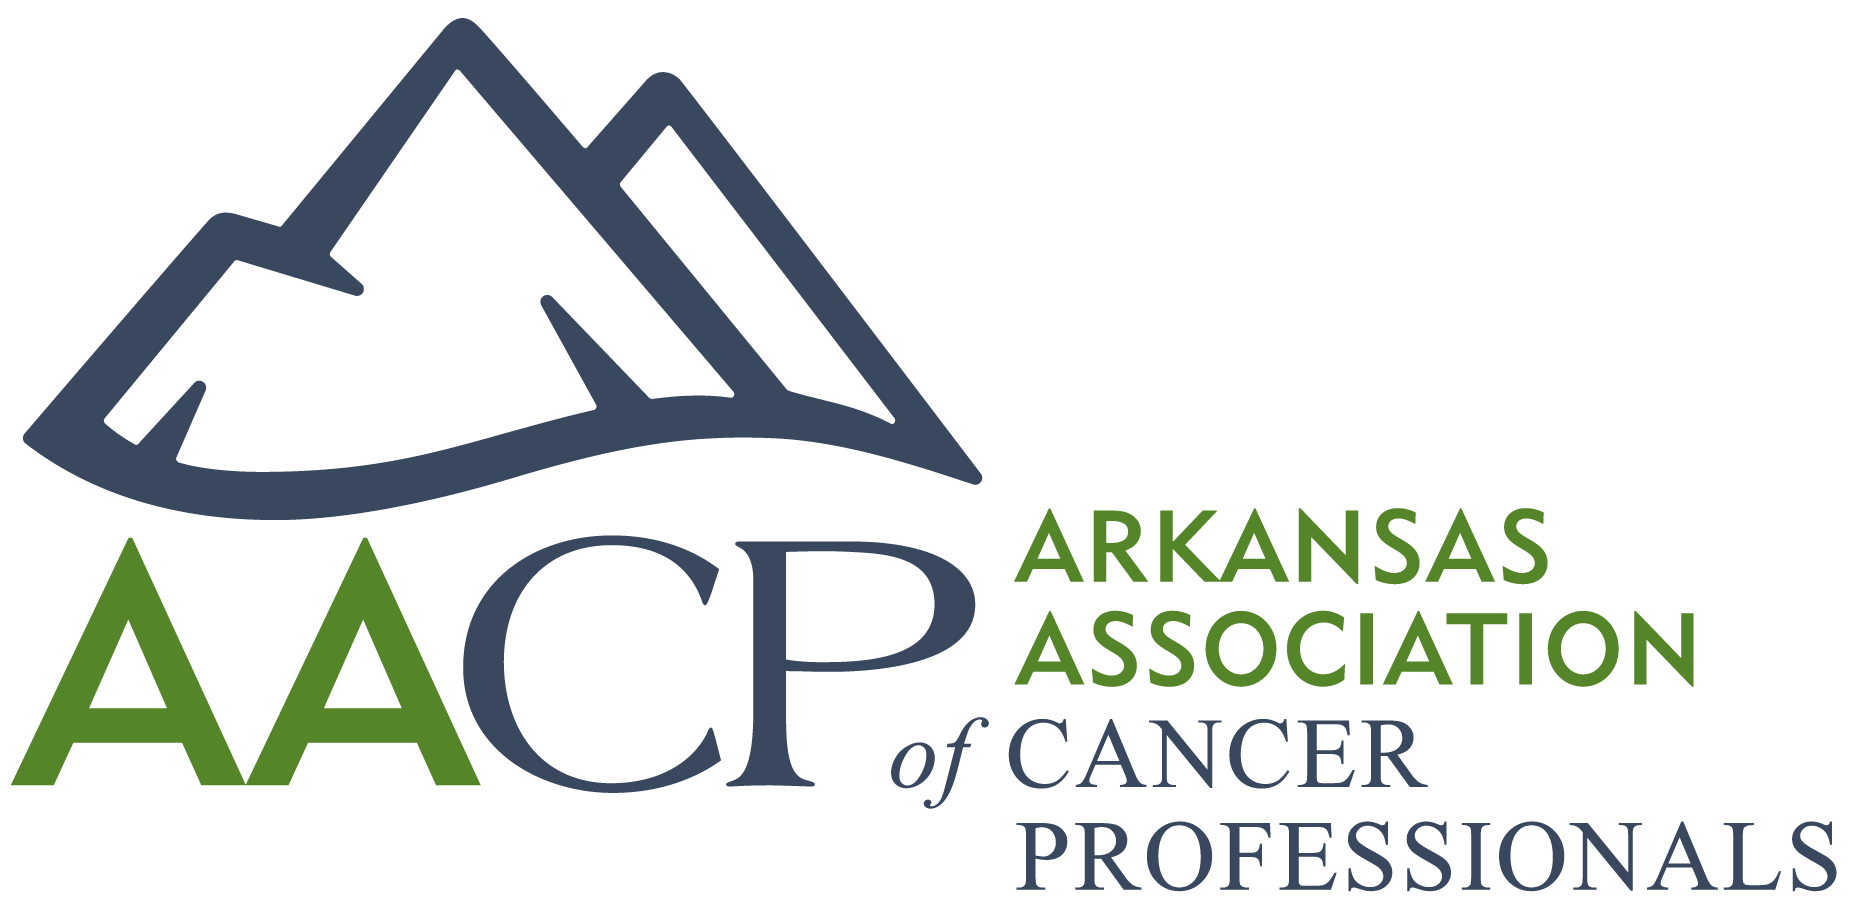 Arkansas Association of Cancer Professionals